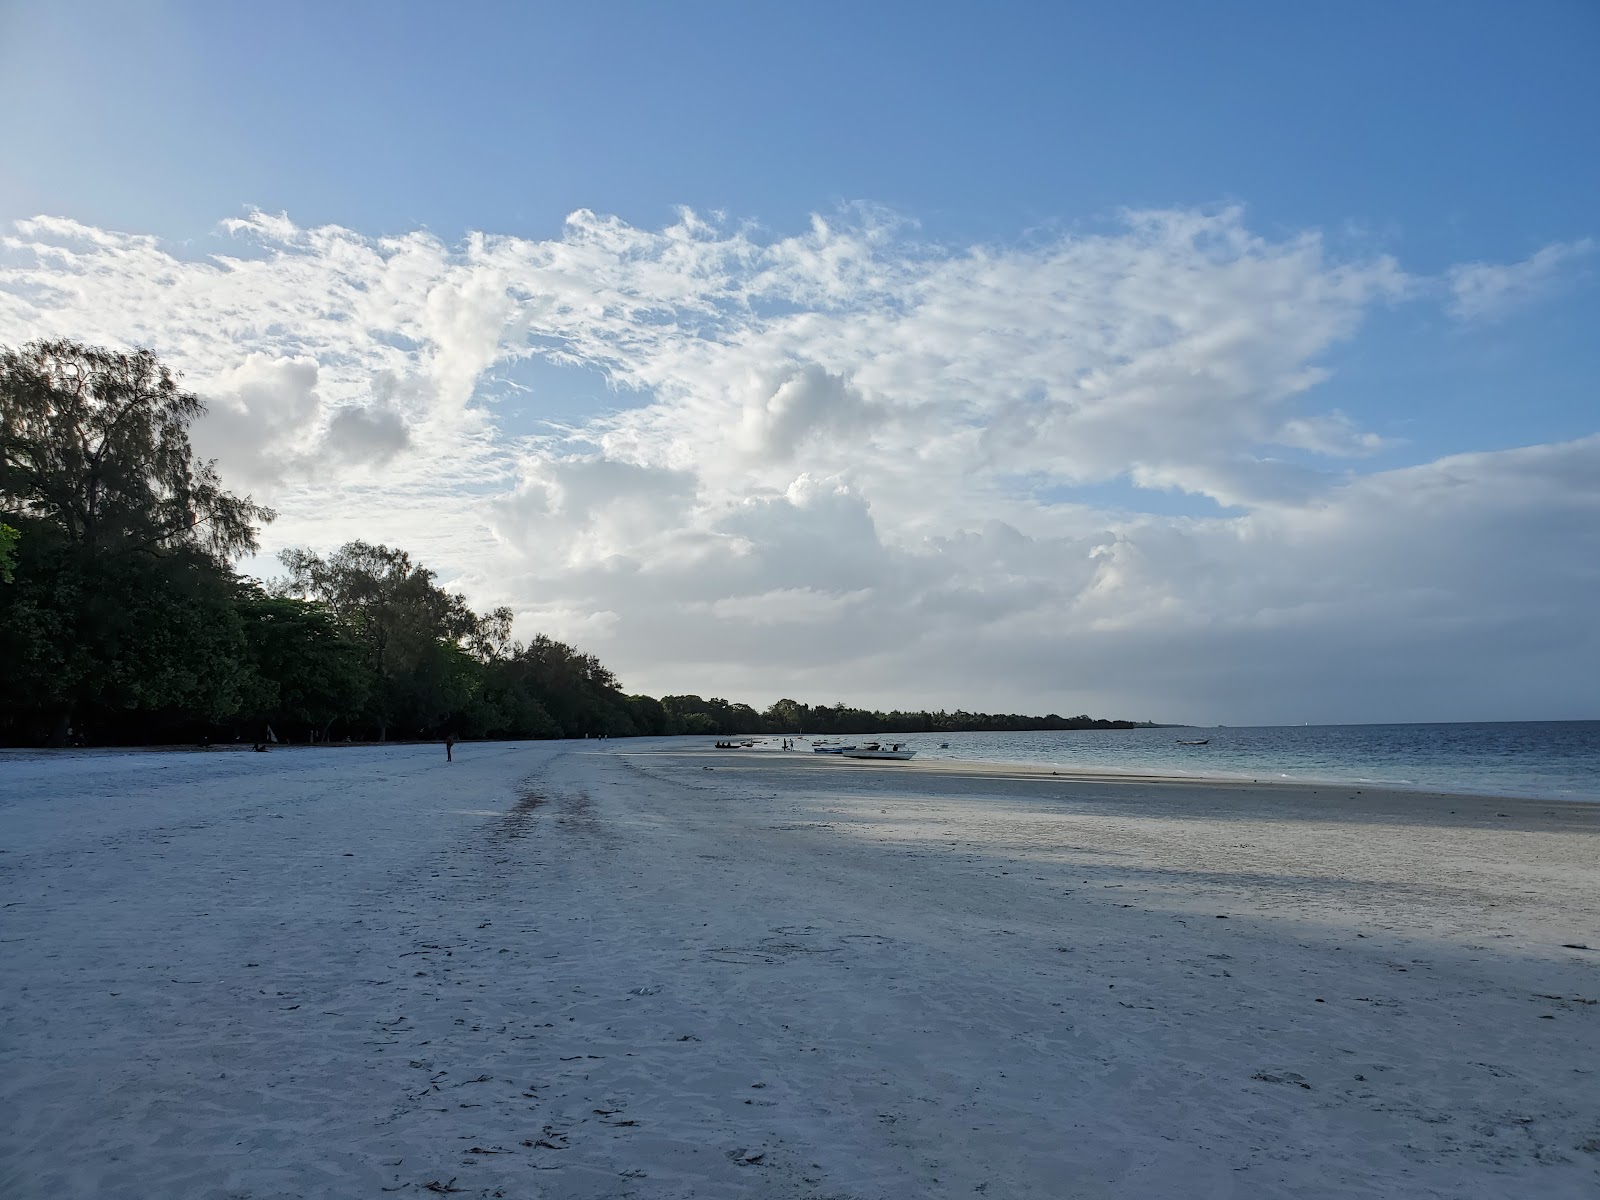 Foto de Vumawimbi Beach - lugar popular entre los conocedores del relax